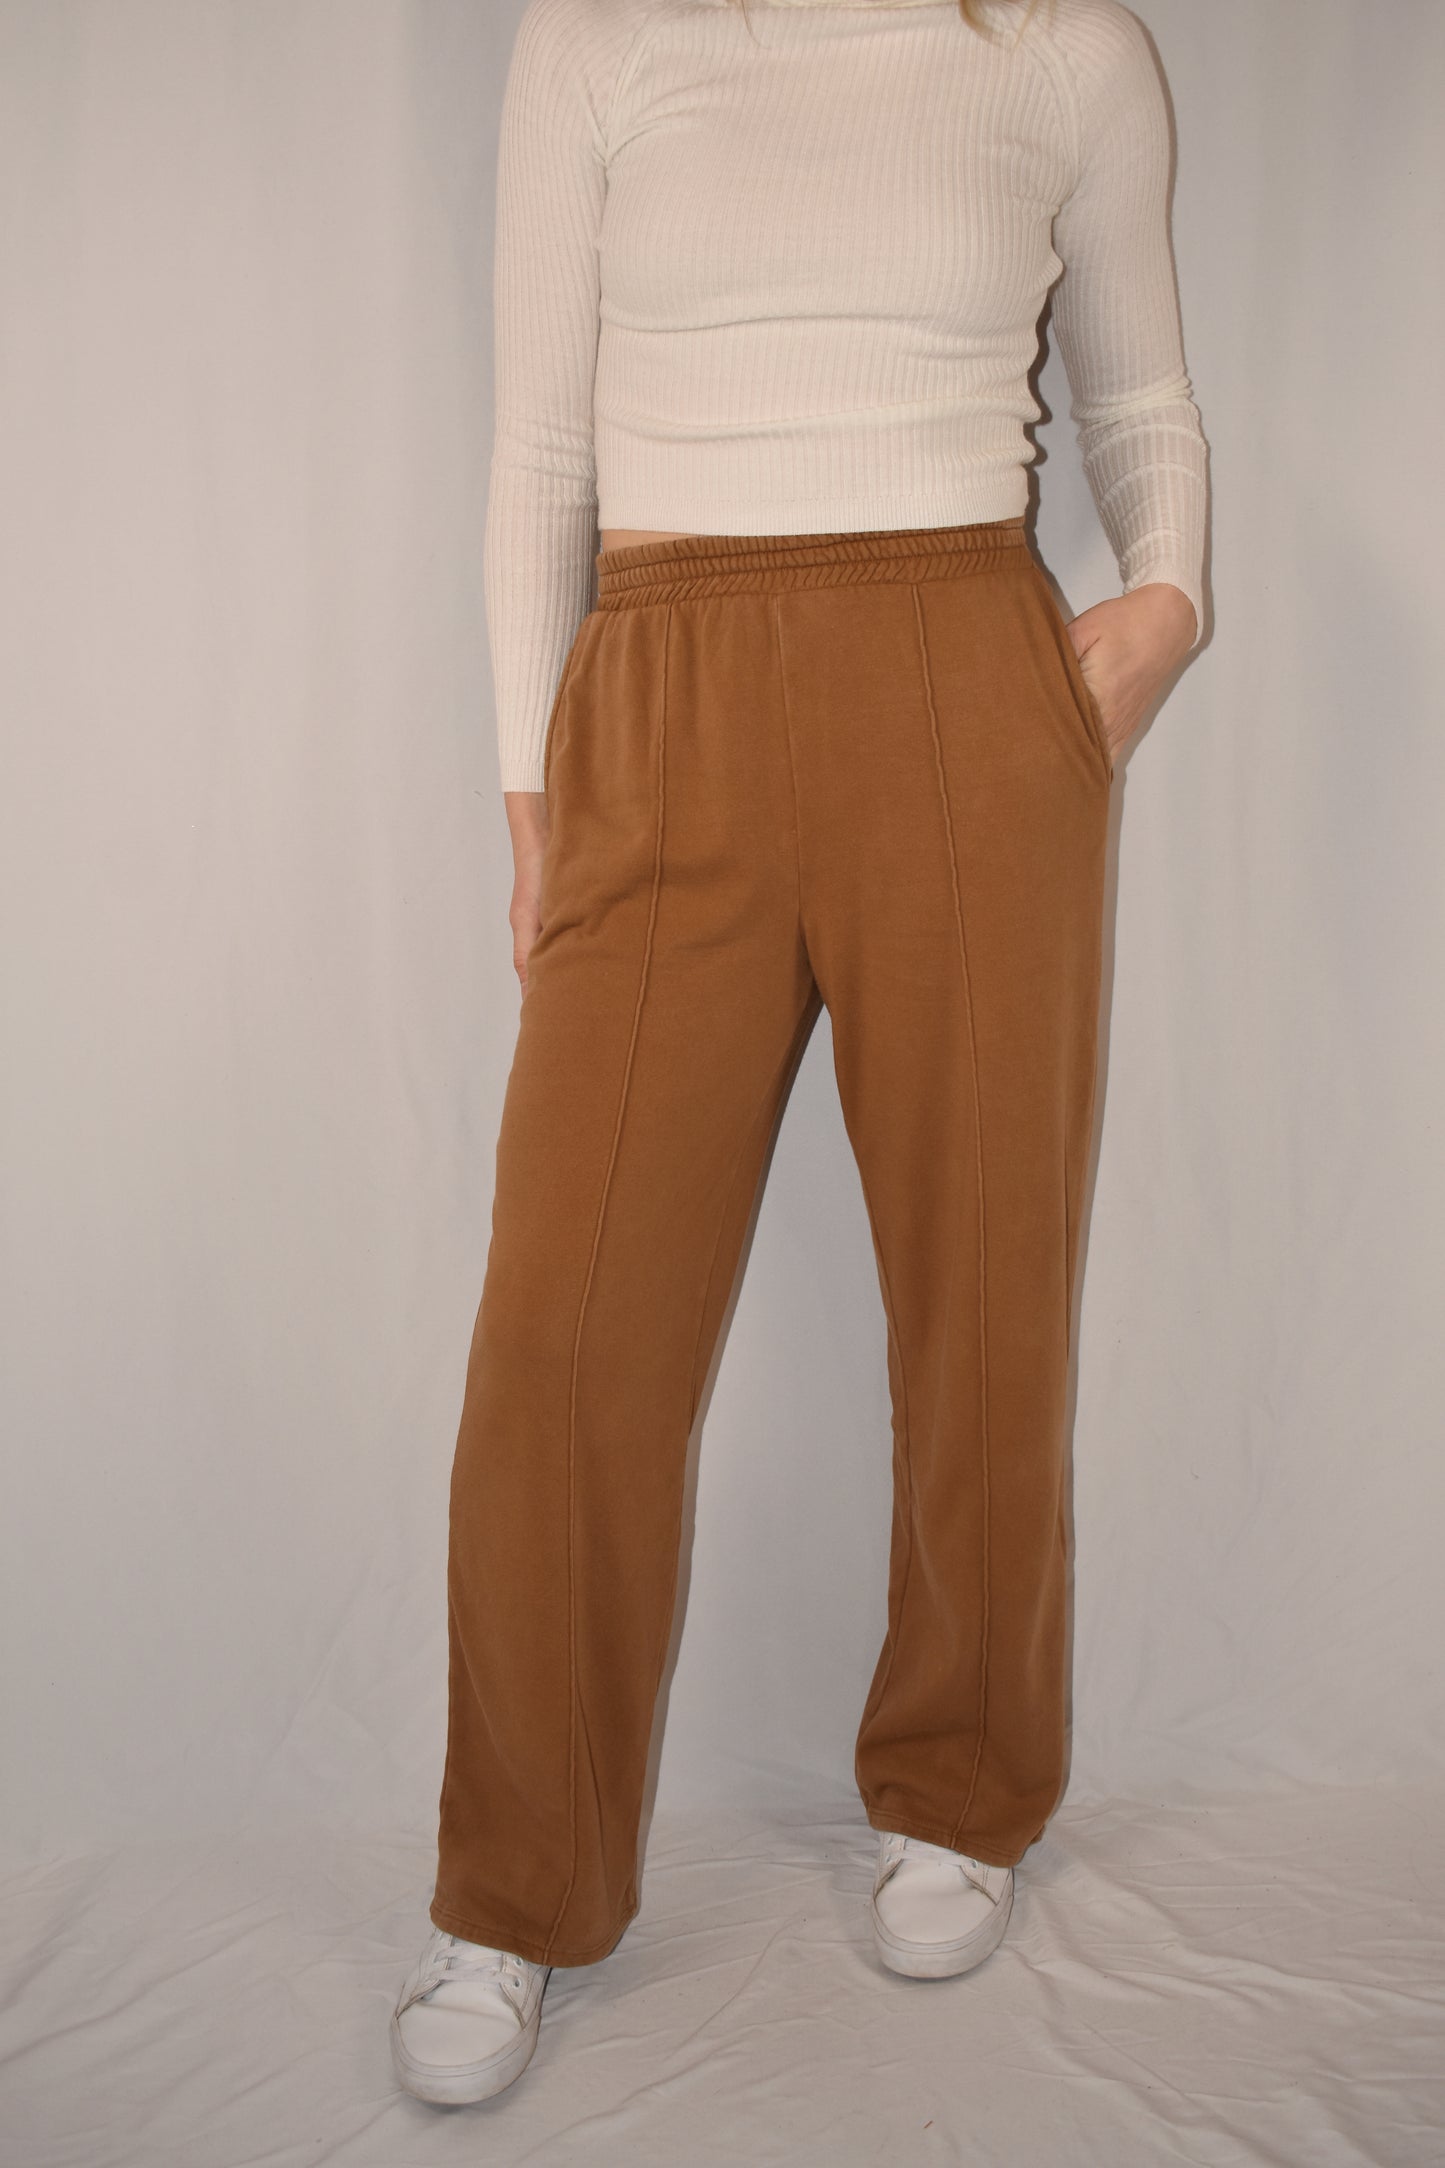 pin tuck sweatpants, straight leg, full length, side pockets, stretchy waist band, no tie. 